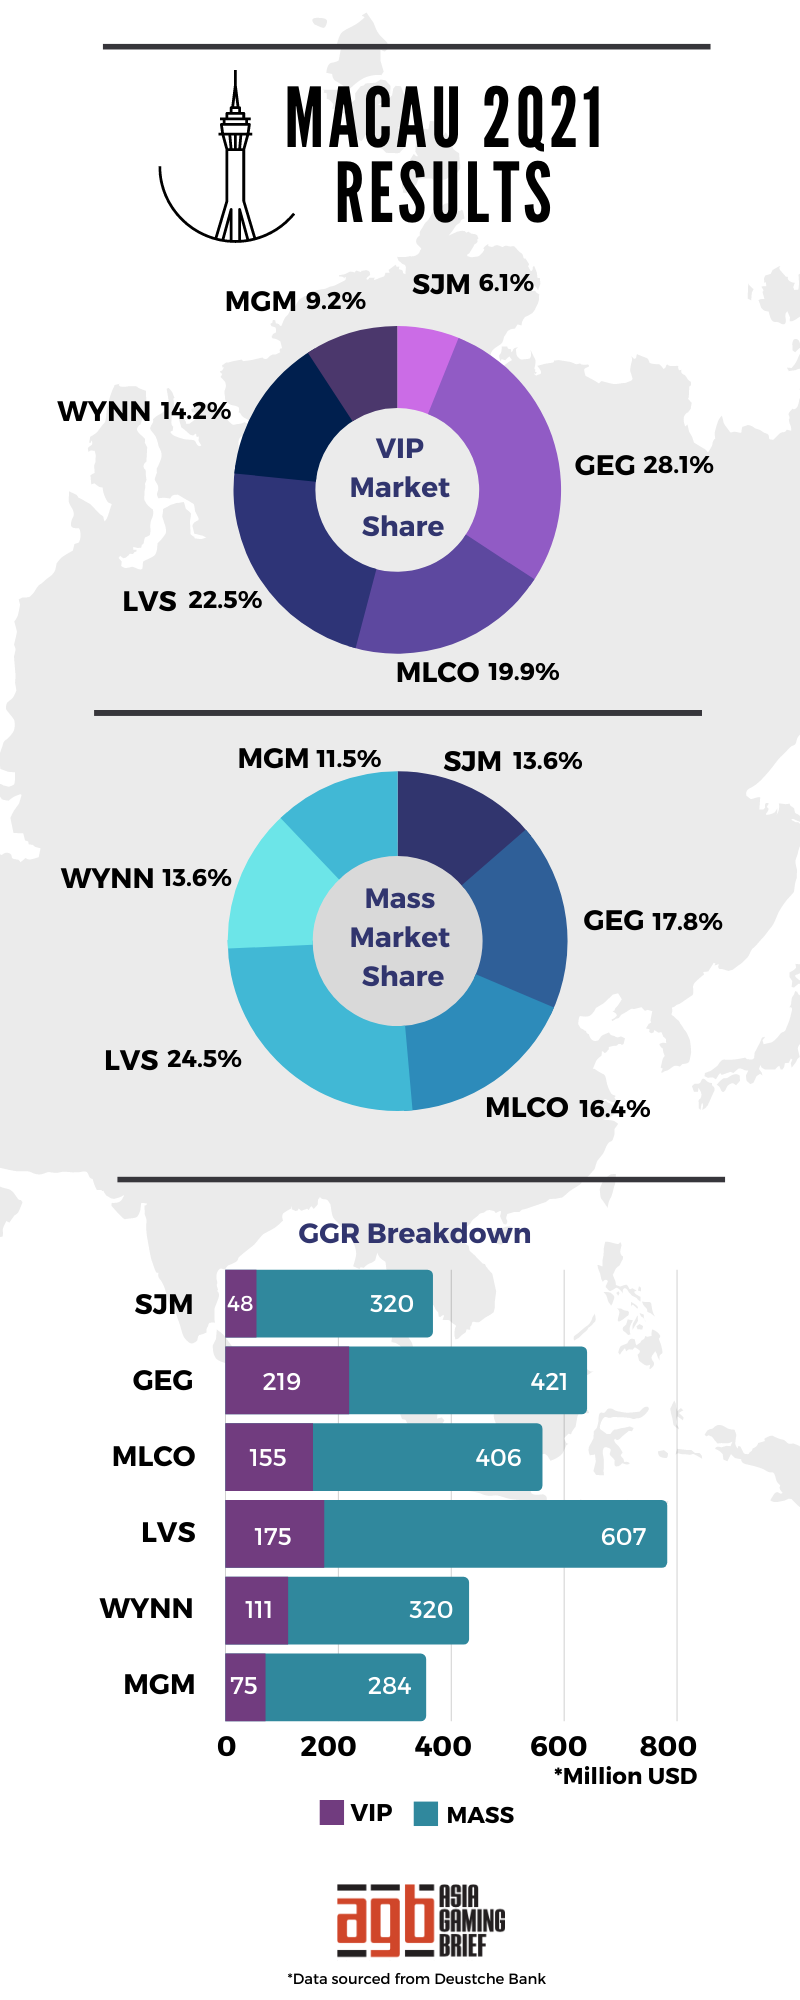 Macau's,macau,casino,gaming, operators, quarter, results, 2q21, market share